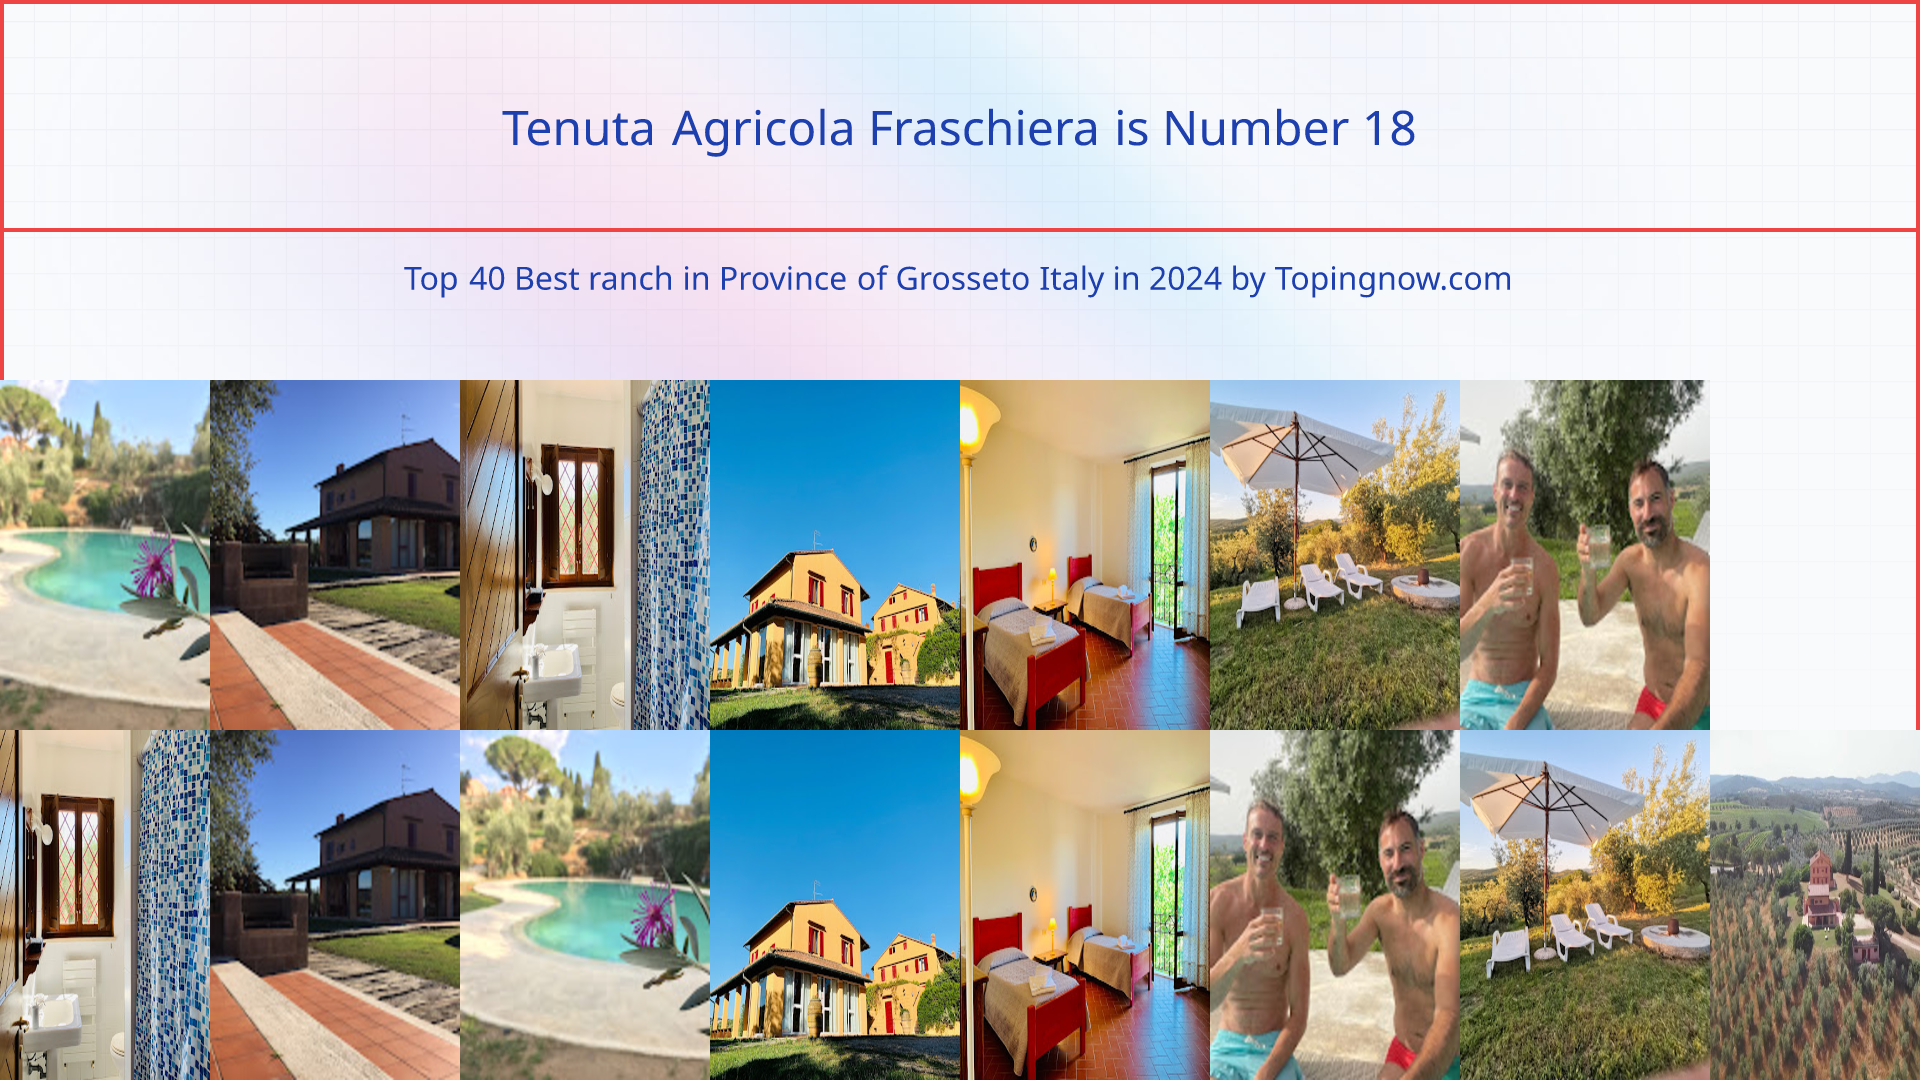 Tenuta Agricola Fraschiera: Top 40 Best ranch in Province of Grosseto Italy in 2024